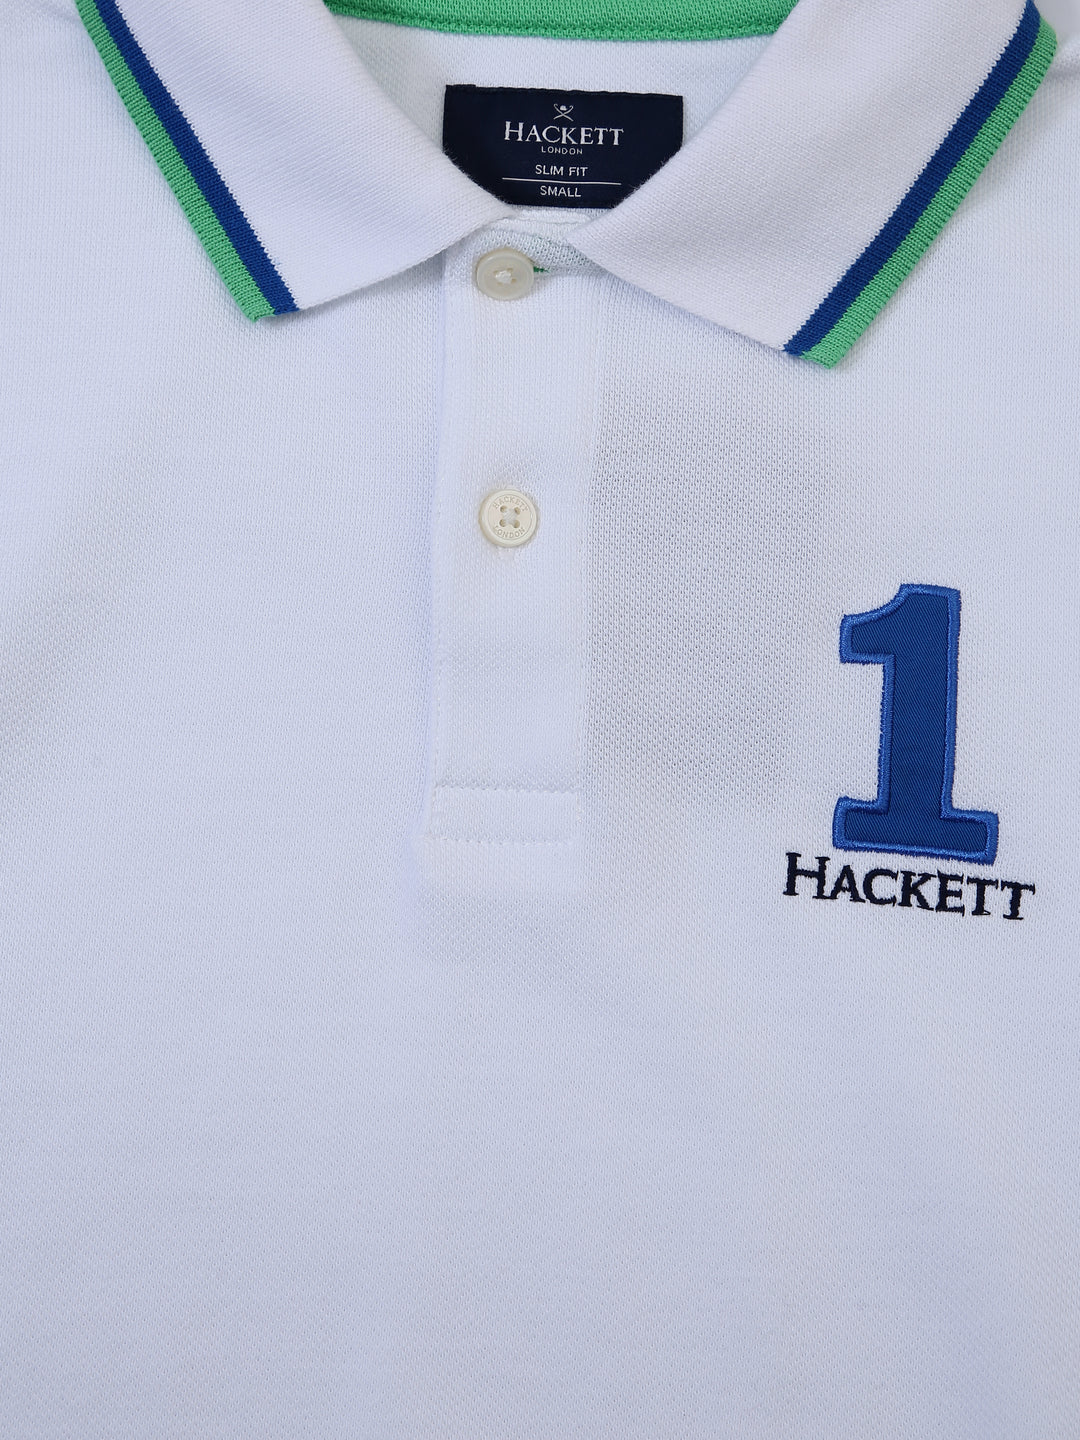 Hackett Mens S/S 1 Logo Printed Polo HM 563001